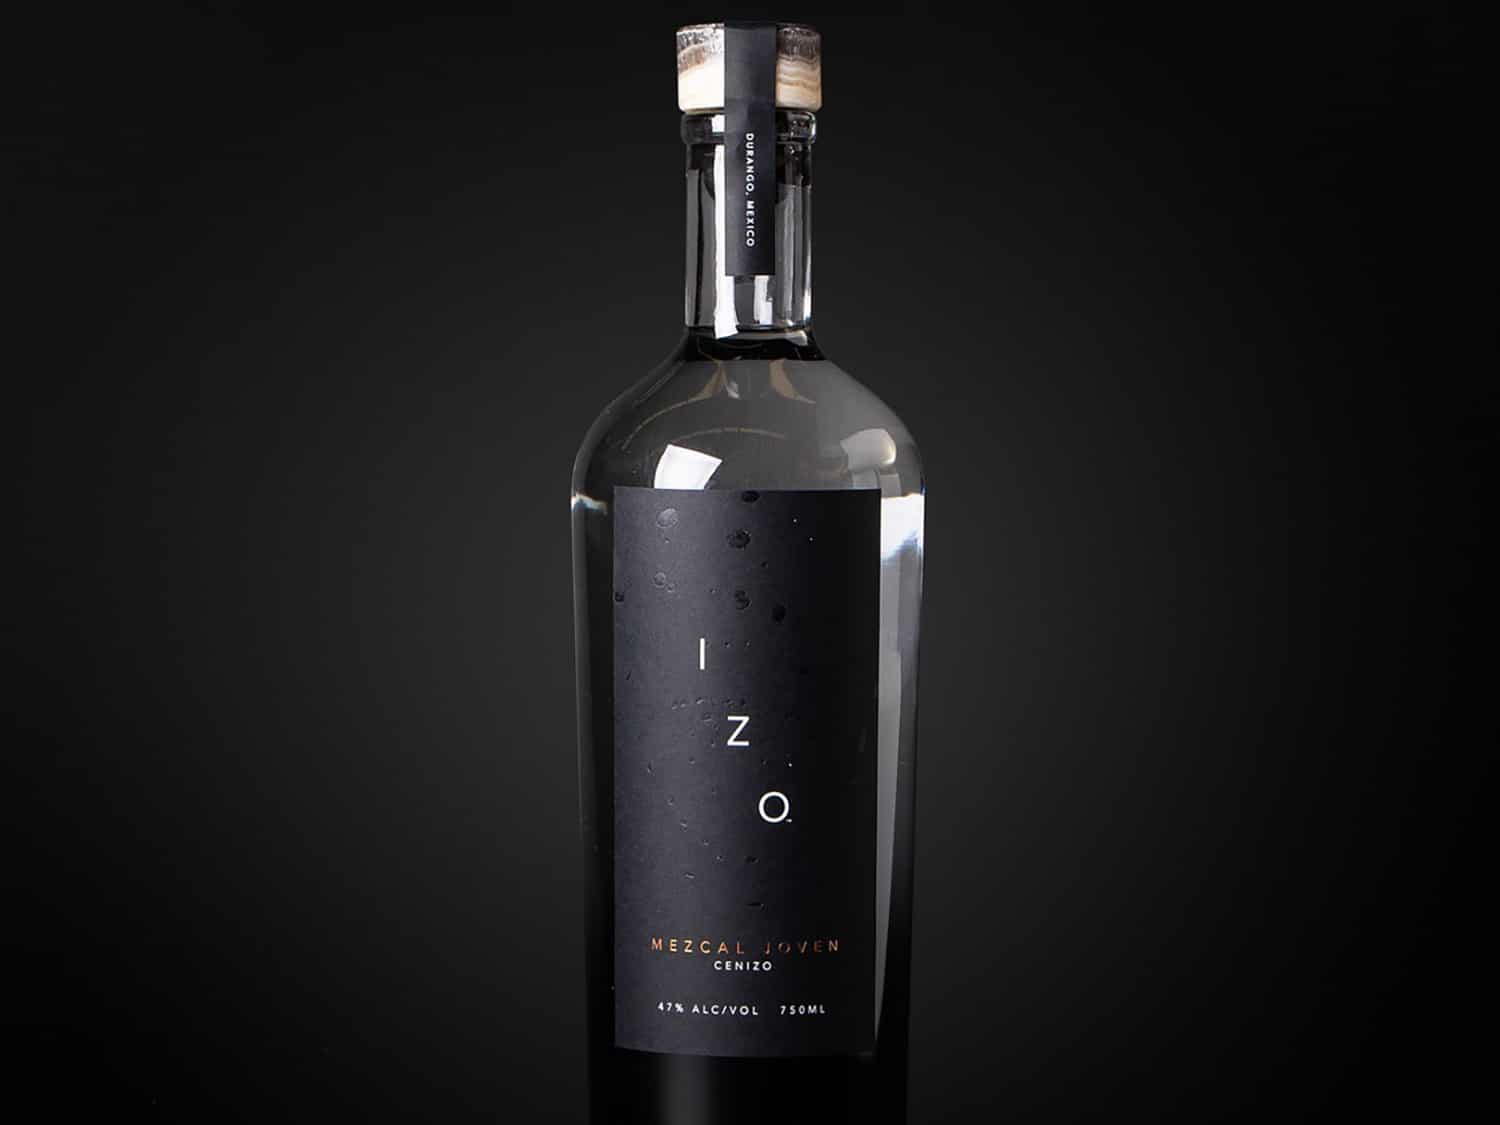 A bottle of IZO Mezcal on a black background.